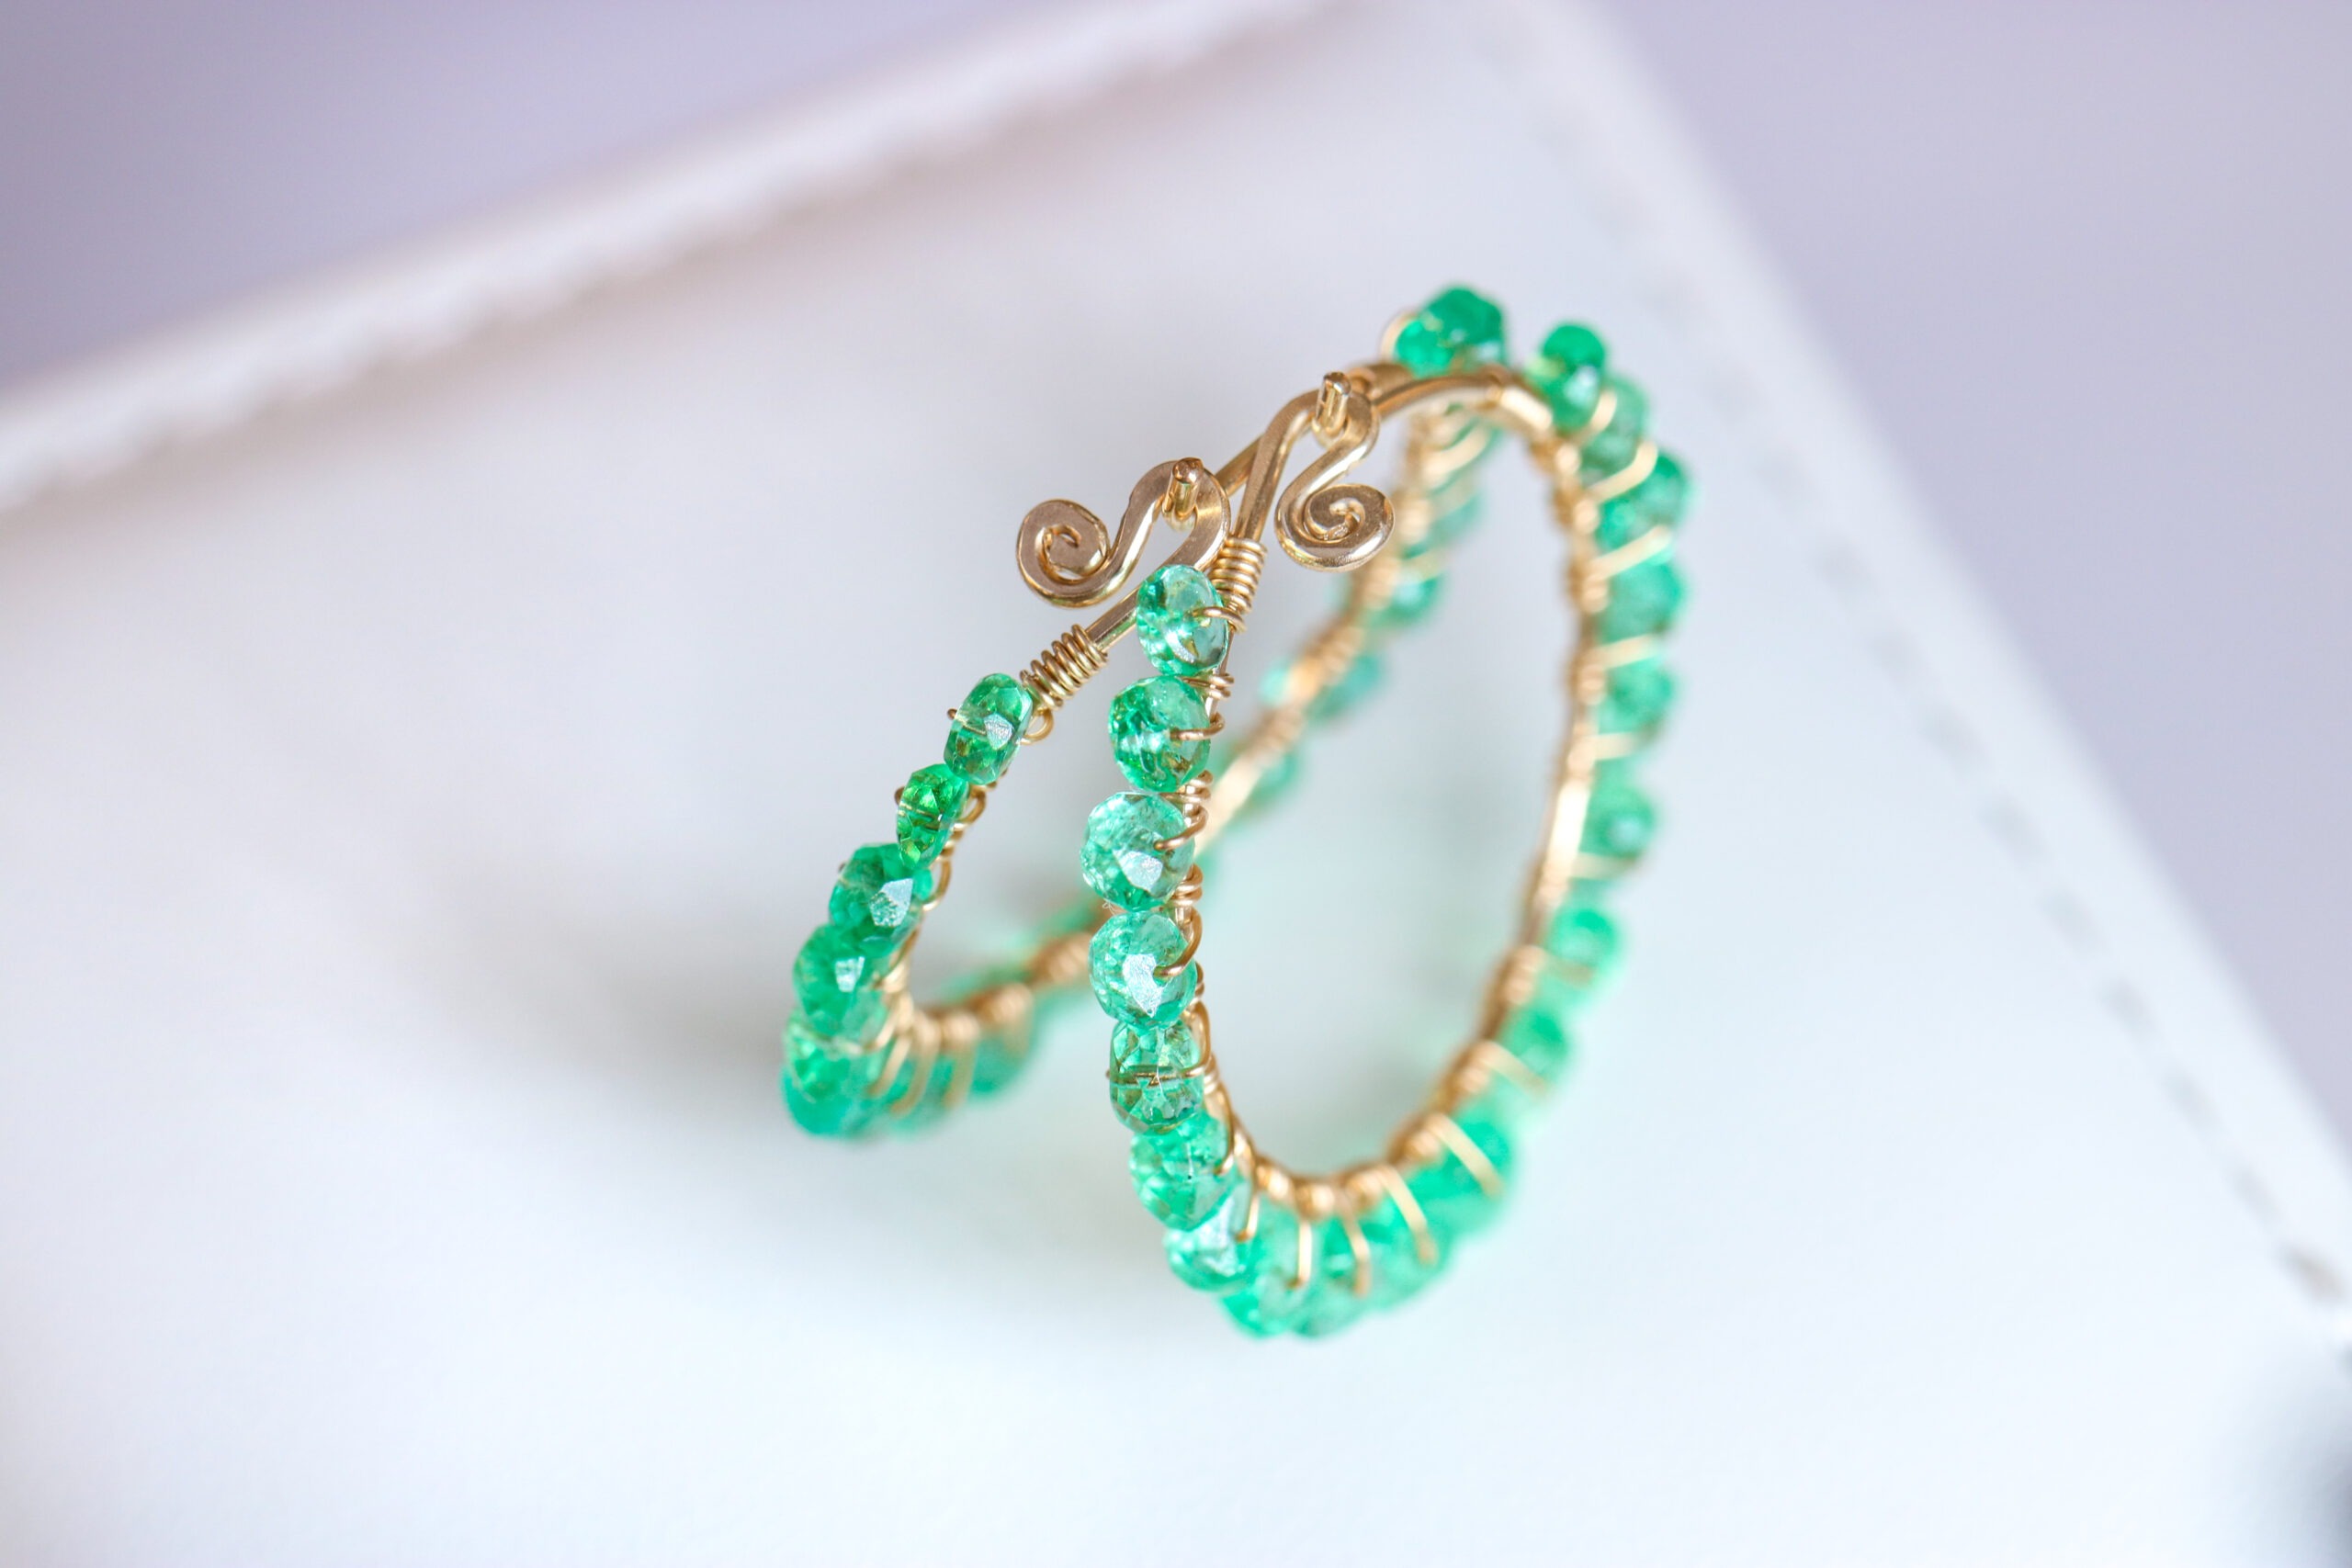 The Esmeralda Earrings – Solid Gold 14K Emerald Hoop Earrings, Colombian Emerald Earrings, 1 inch